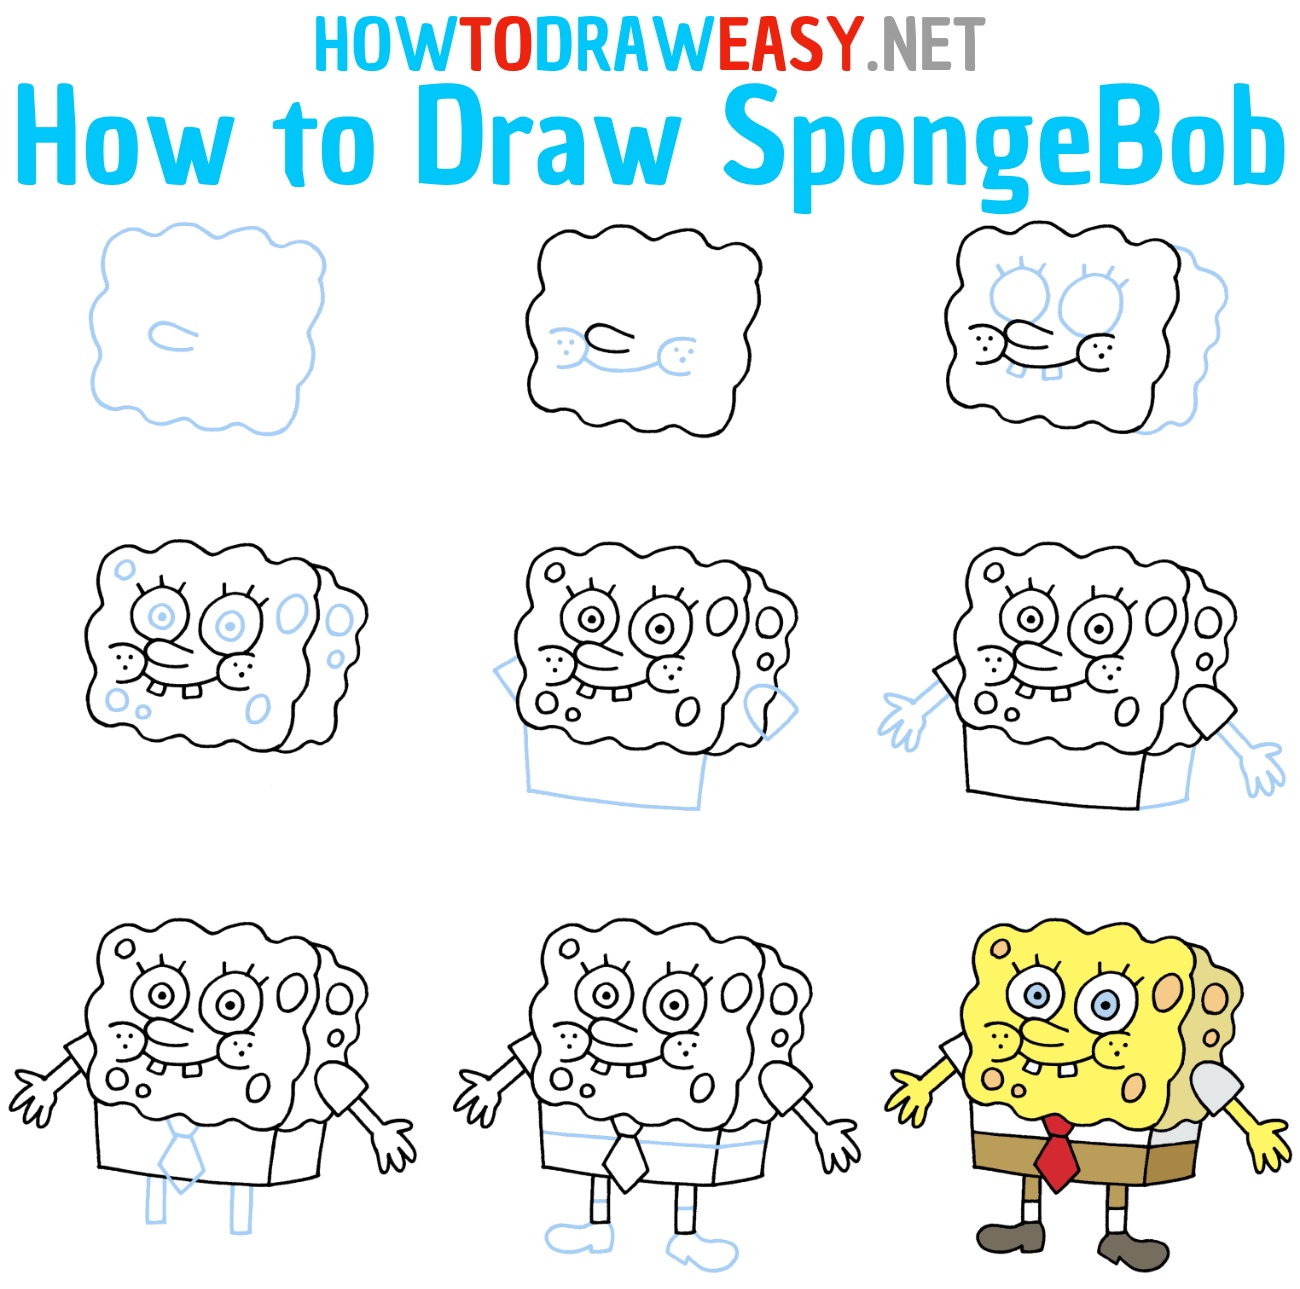 How to Draw SpongeBob SquarePants - Draw for Kids